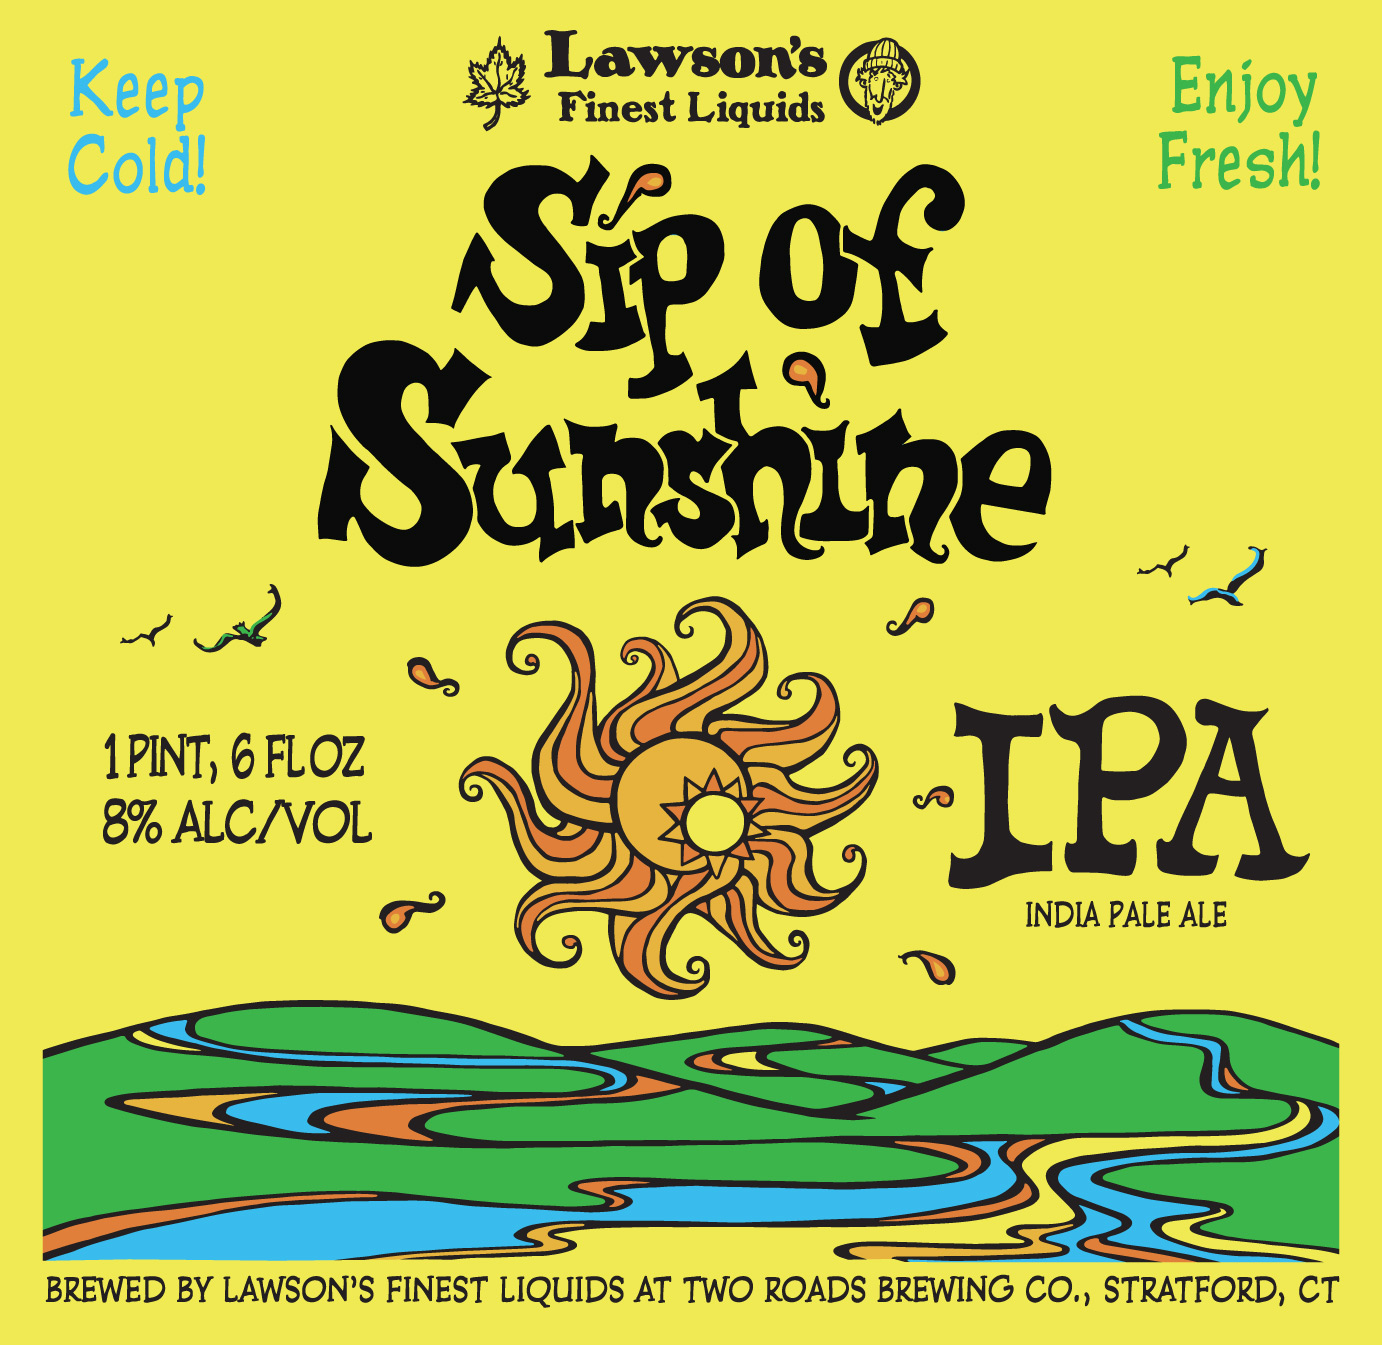 Lawson's Finest Liquids Sip of Sunshine IPA